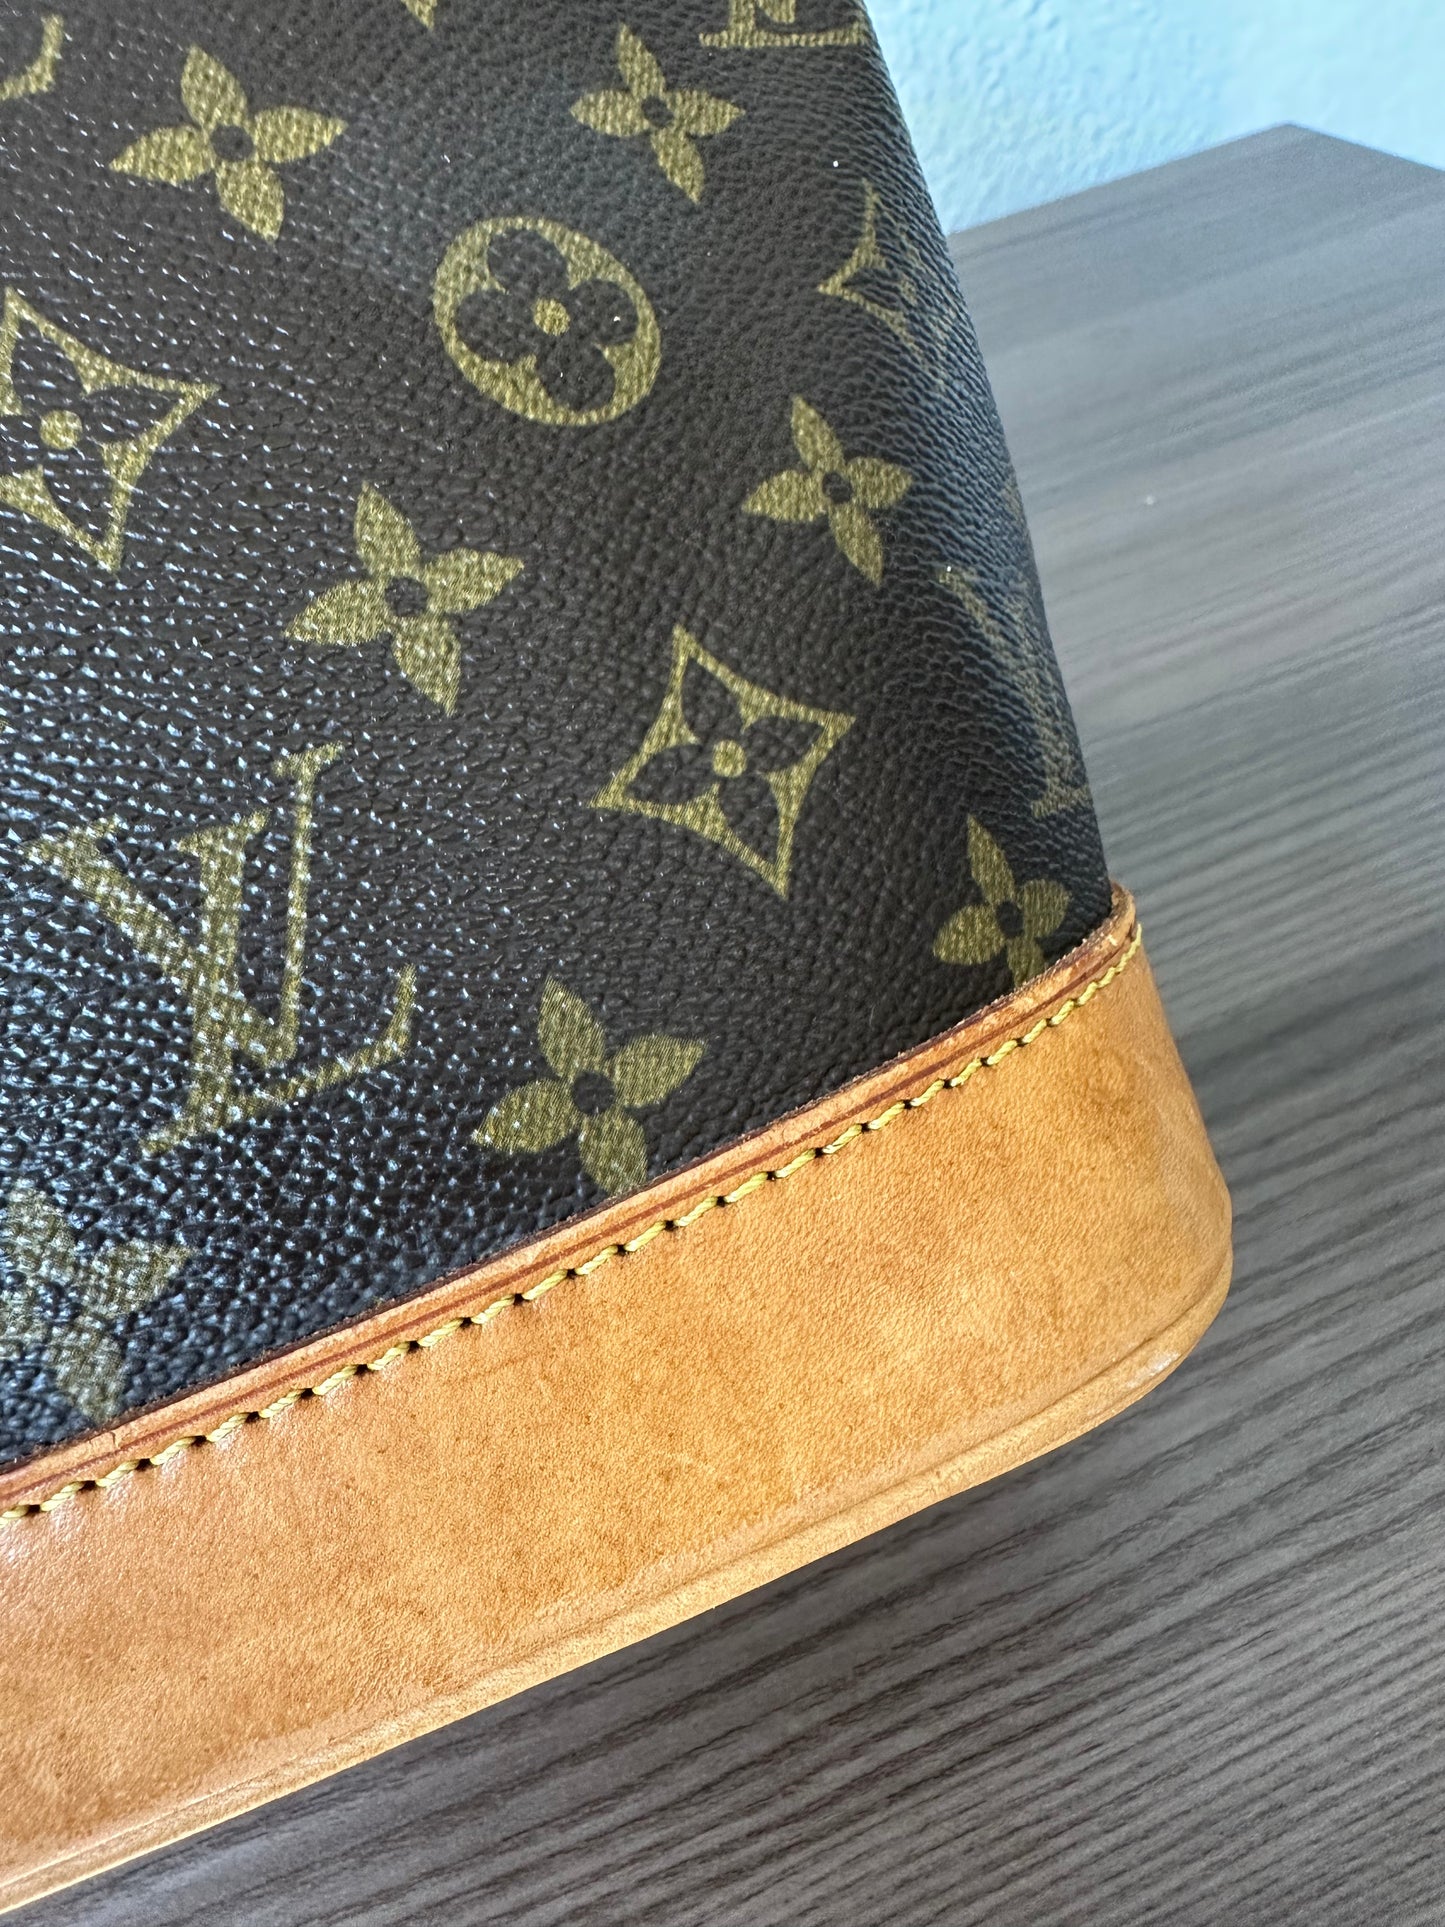 Pre-owned Authentic Louis Vuitton Alma PM Monogram Handbag